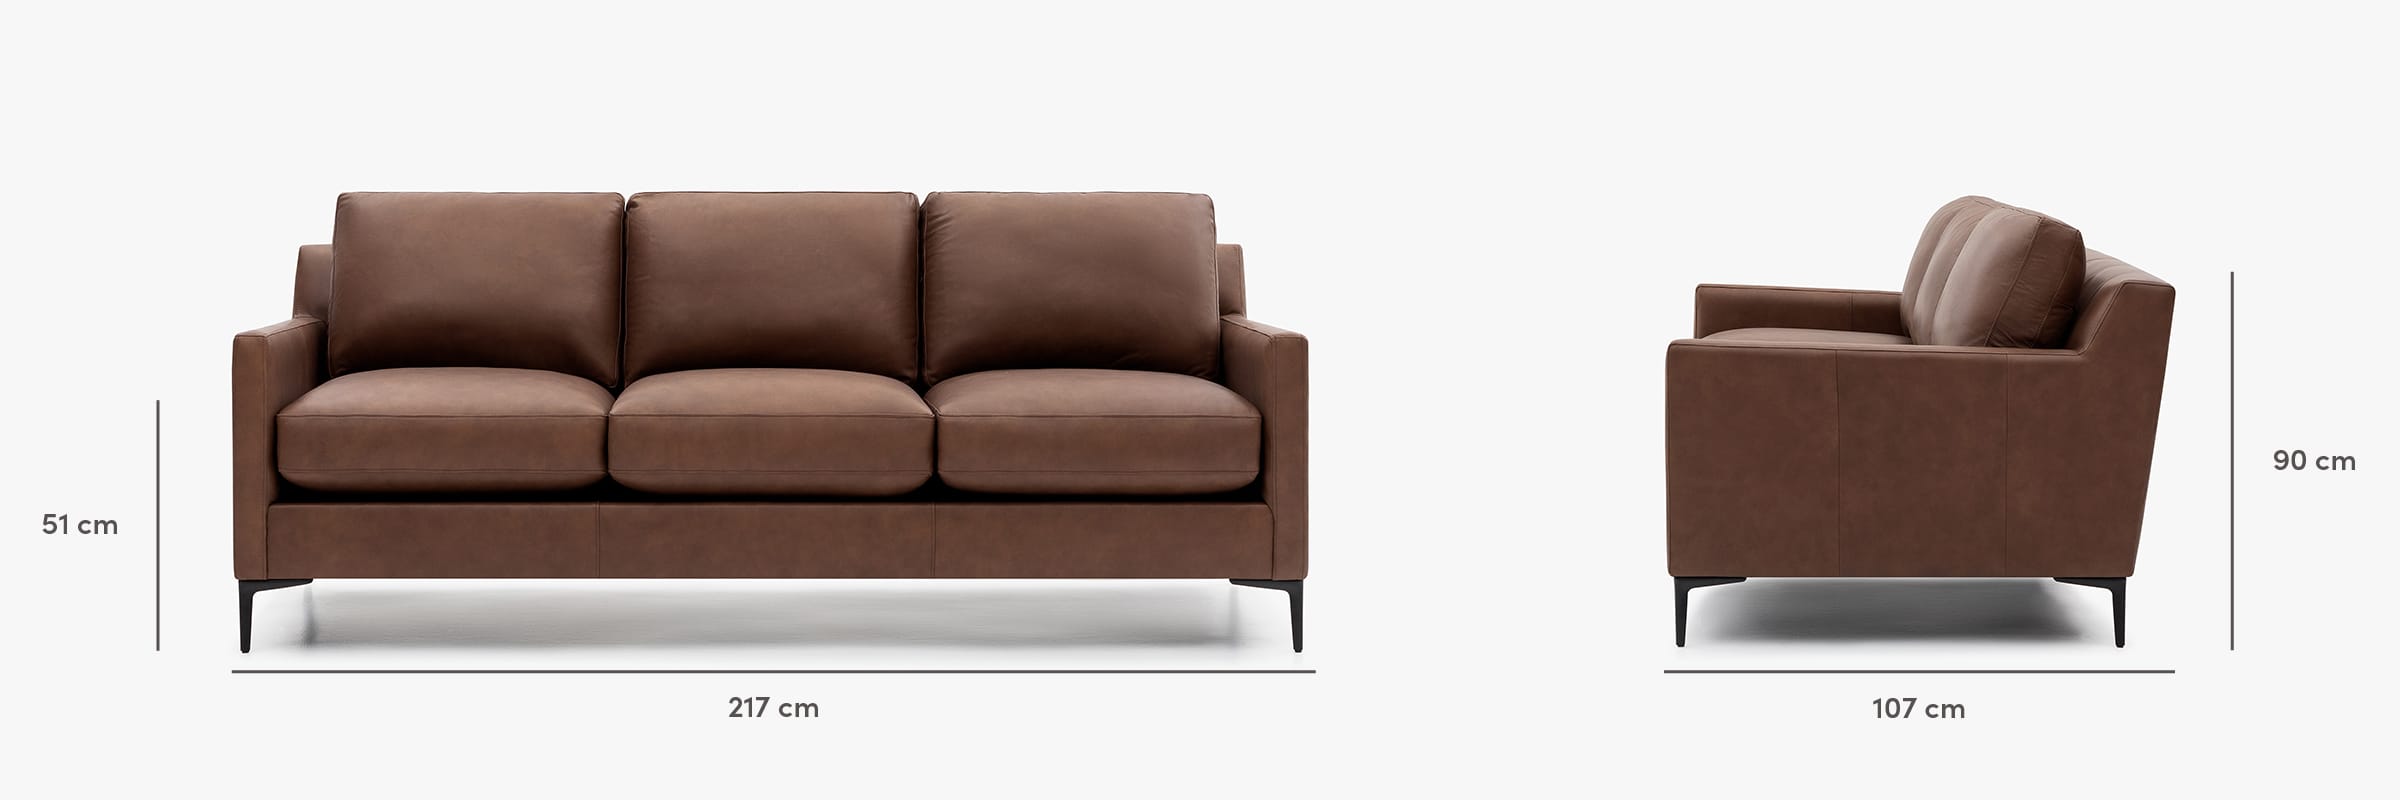 Kennedy leather sofa dimensions